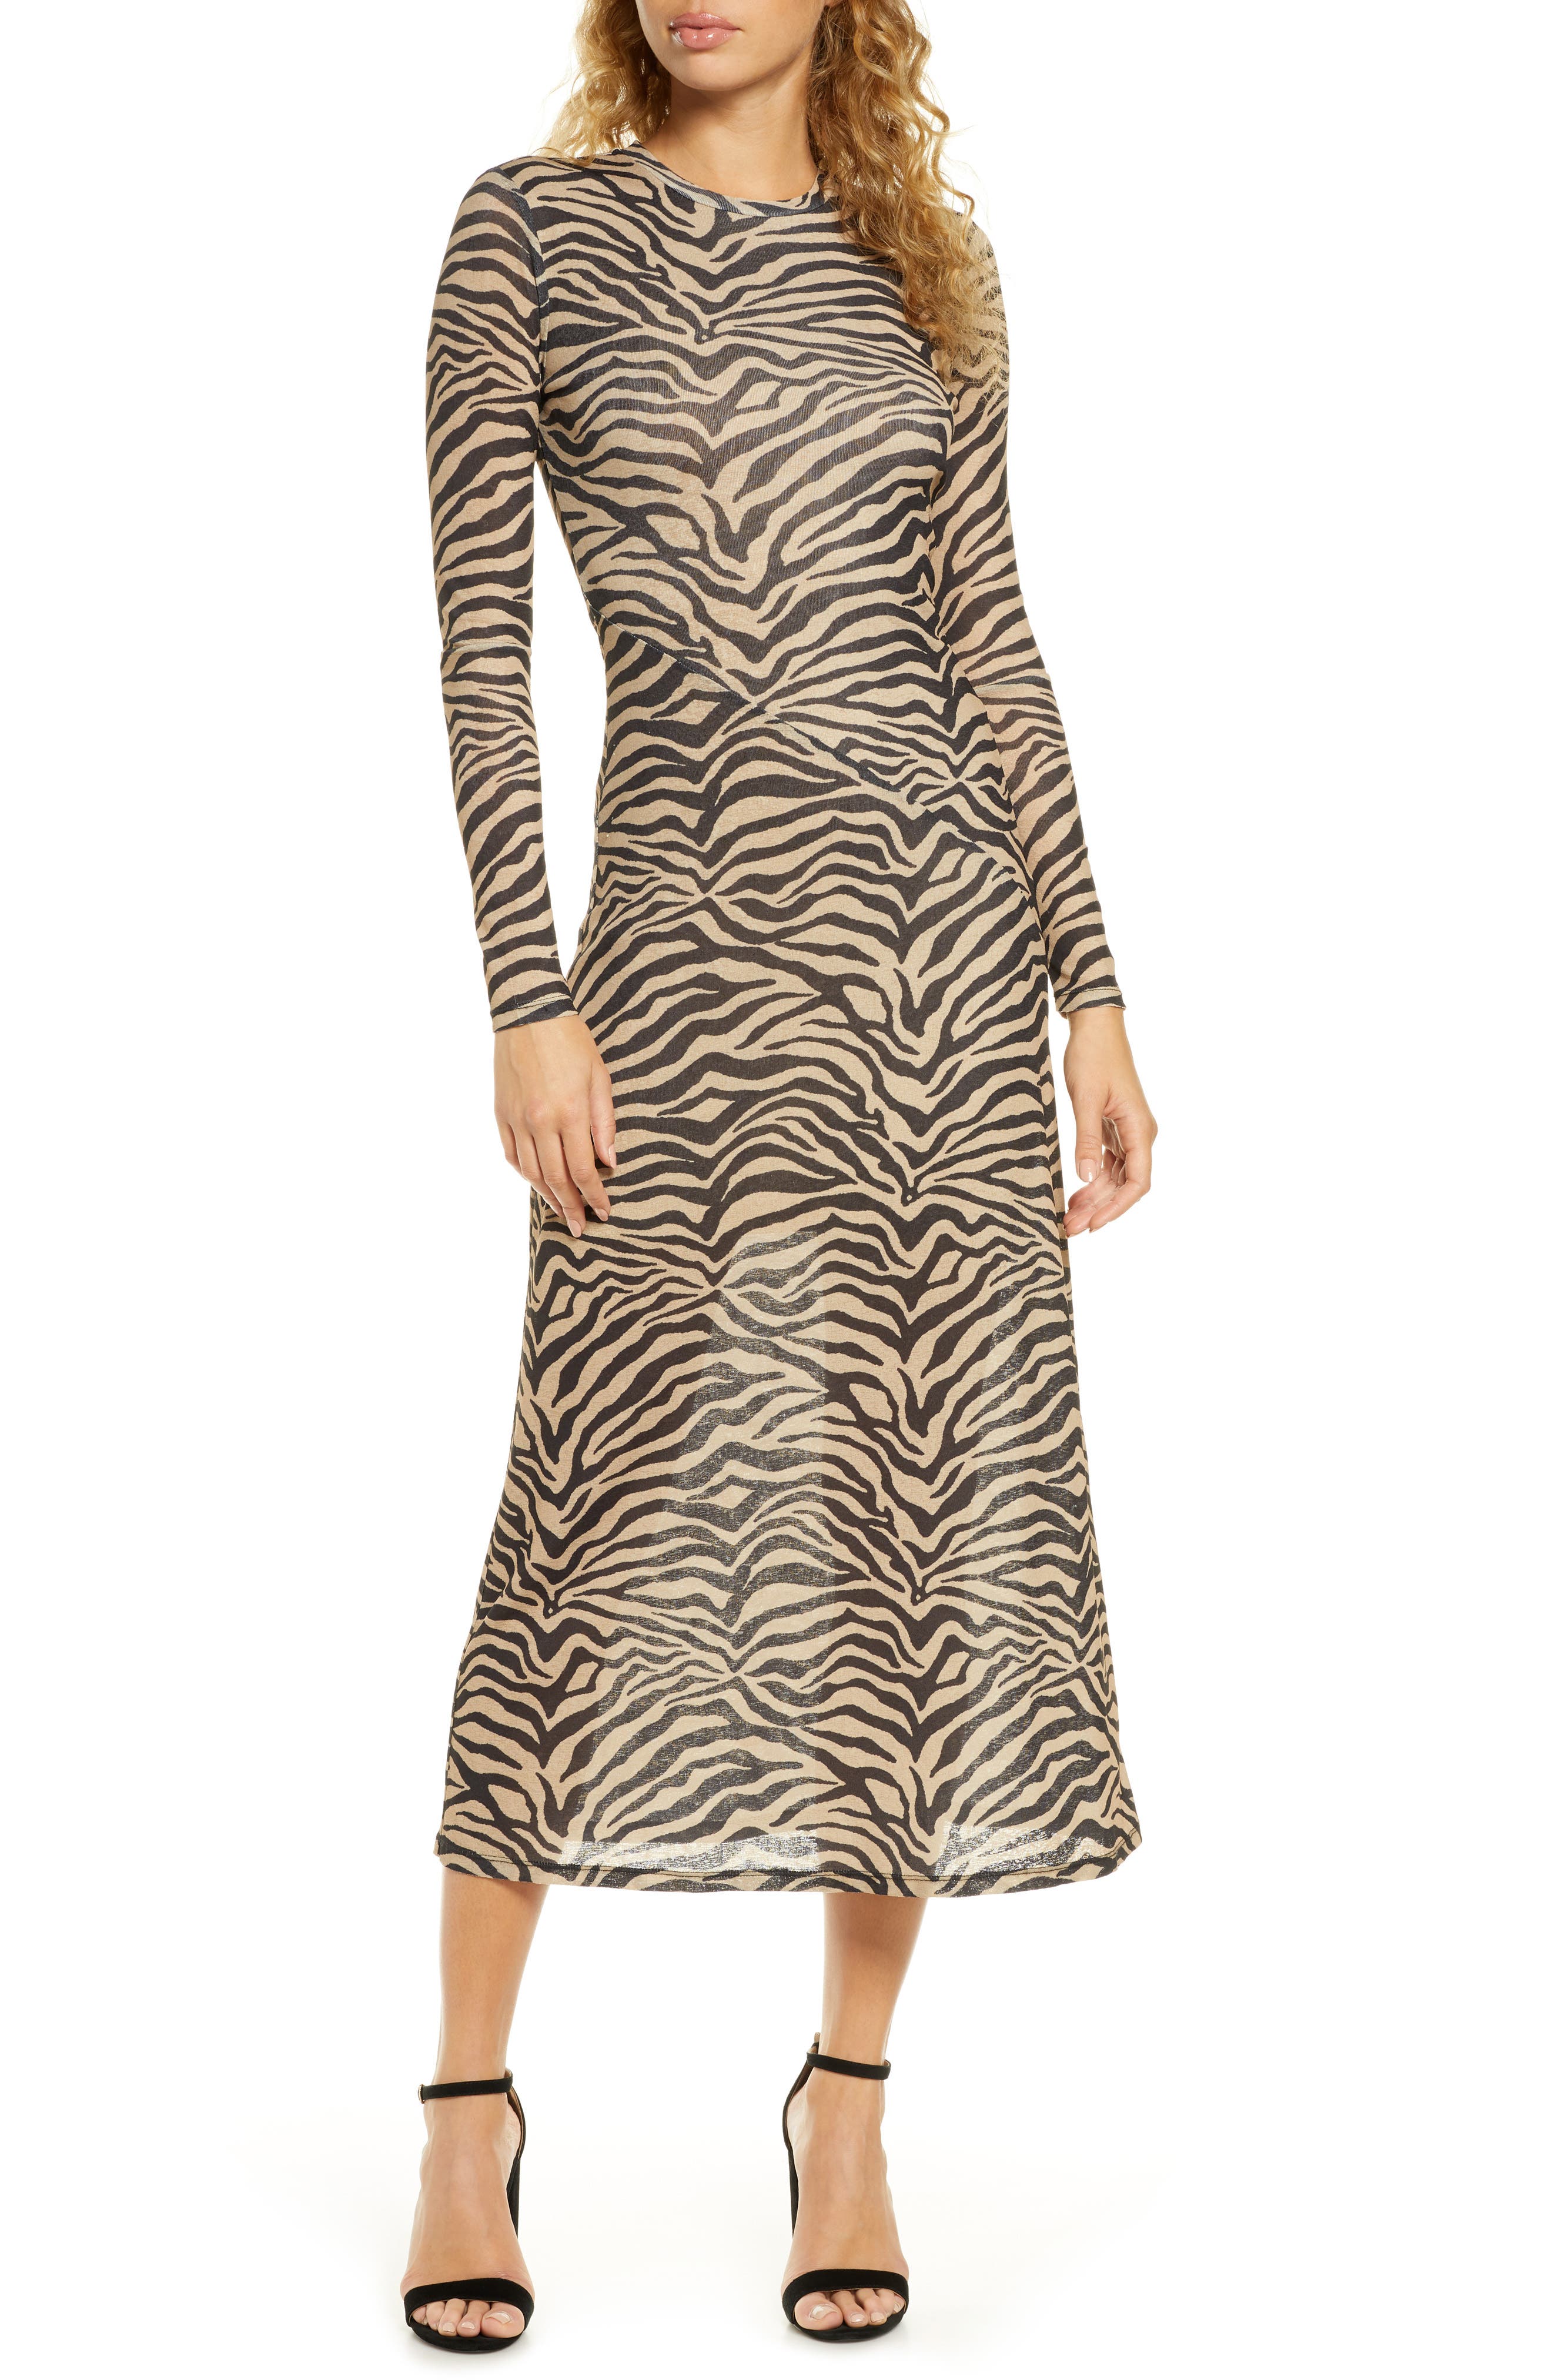 zebra print bardot dress